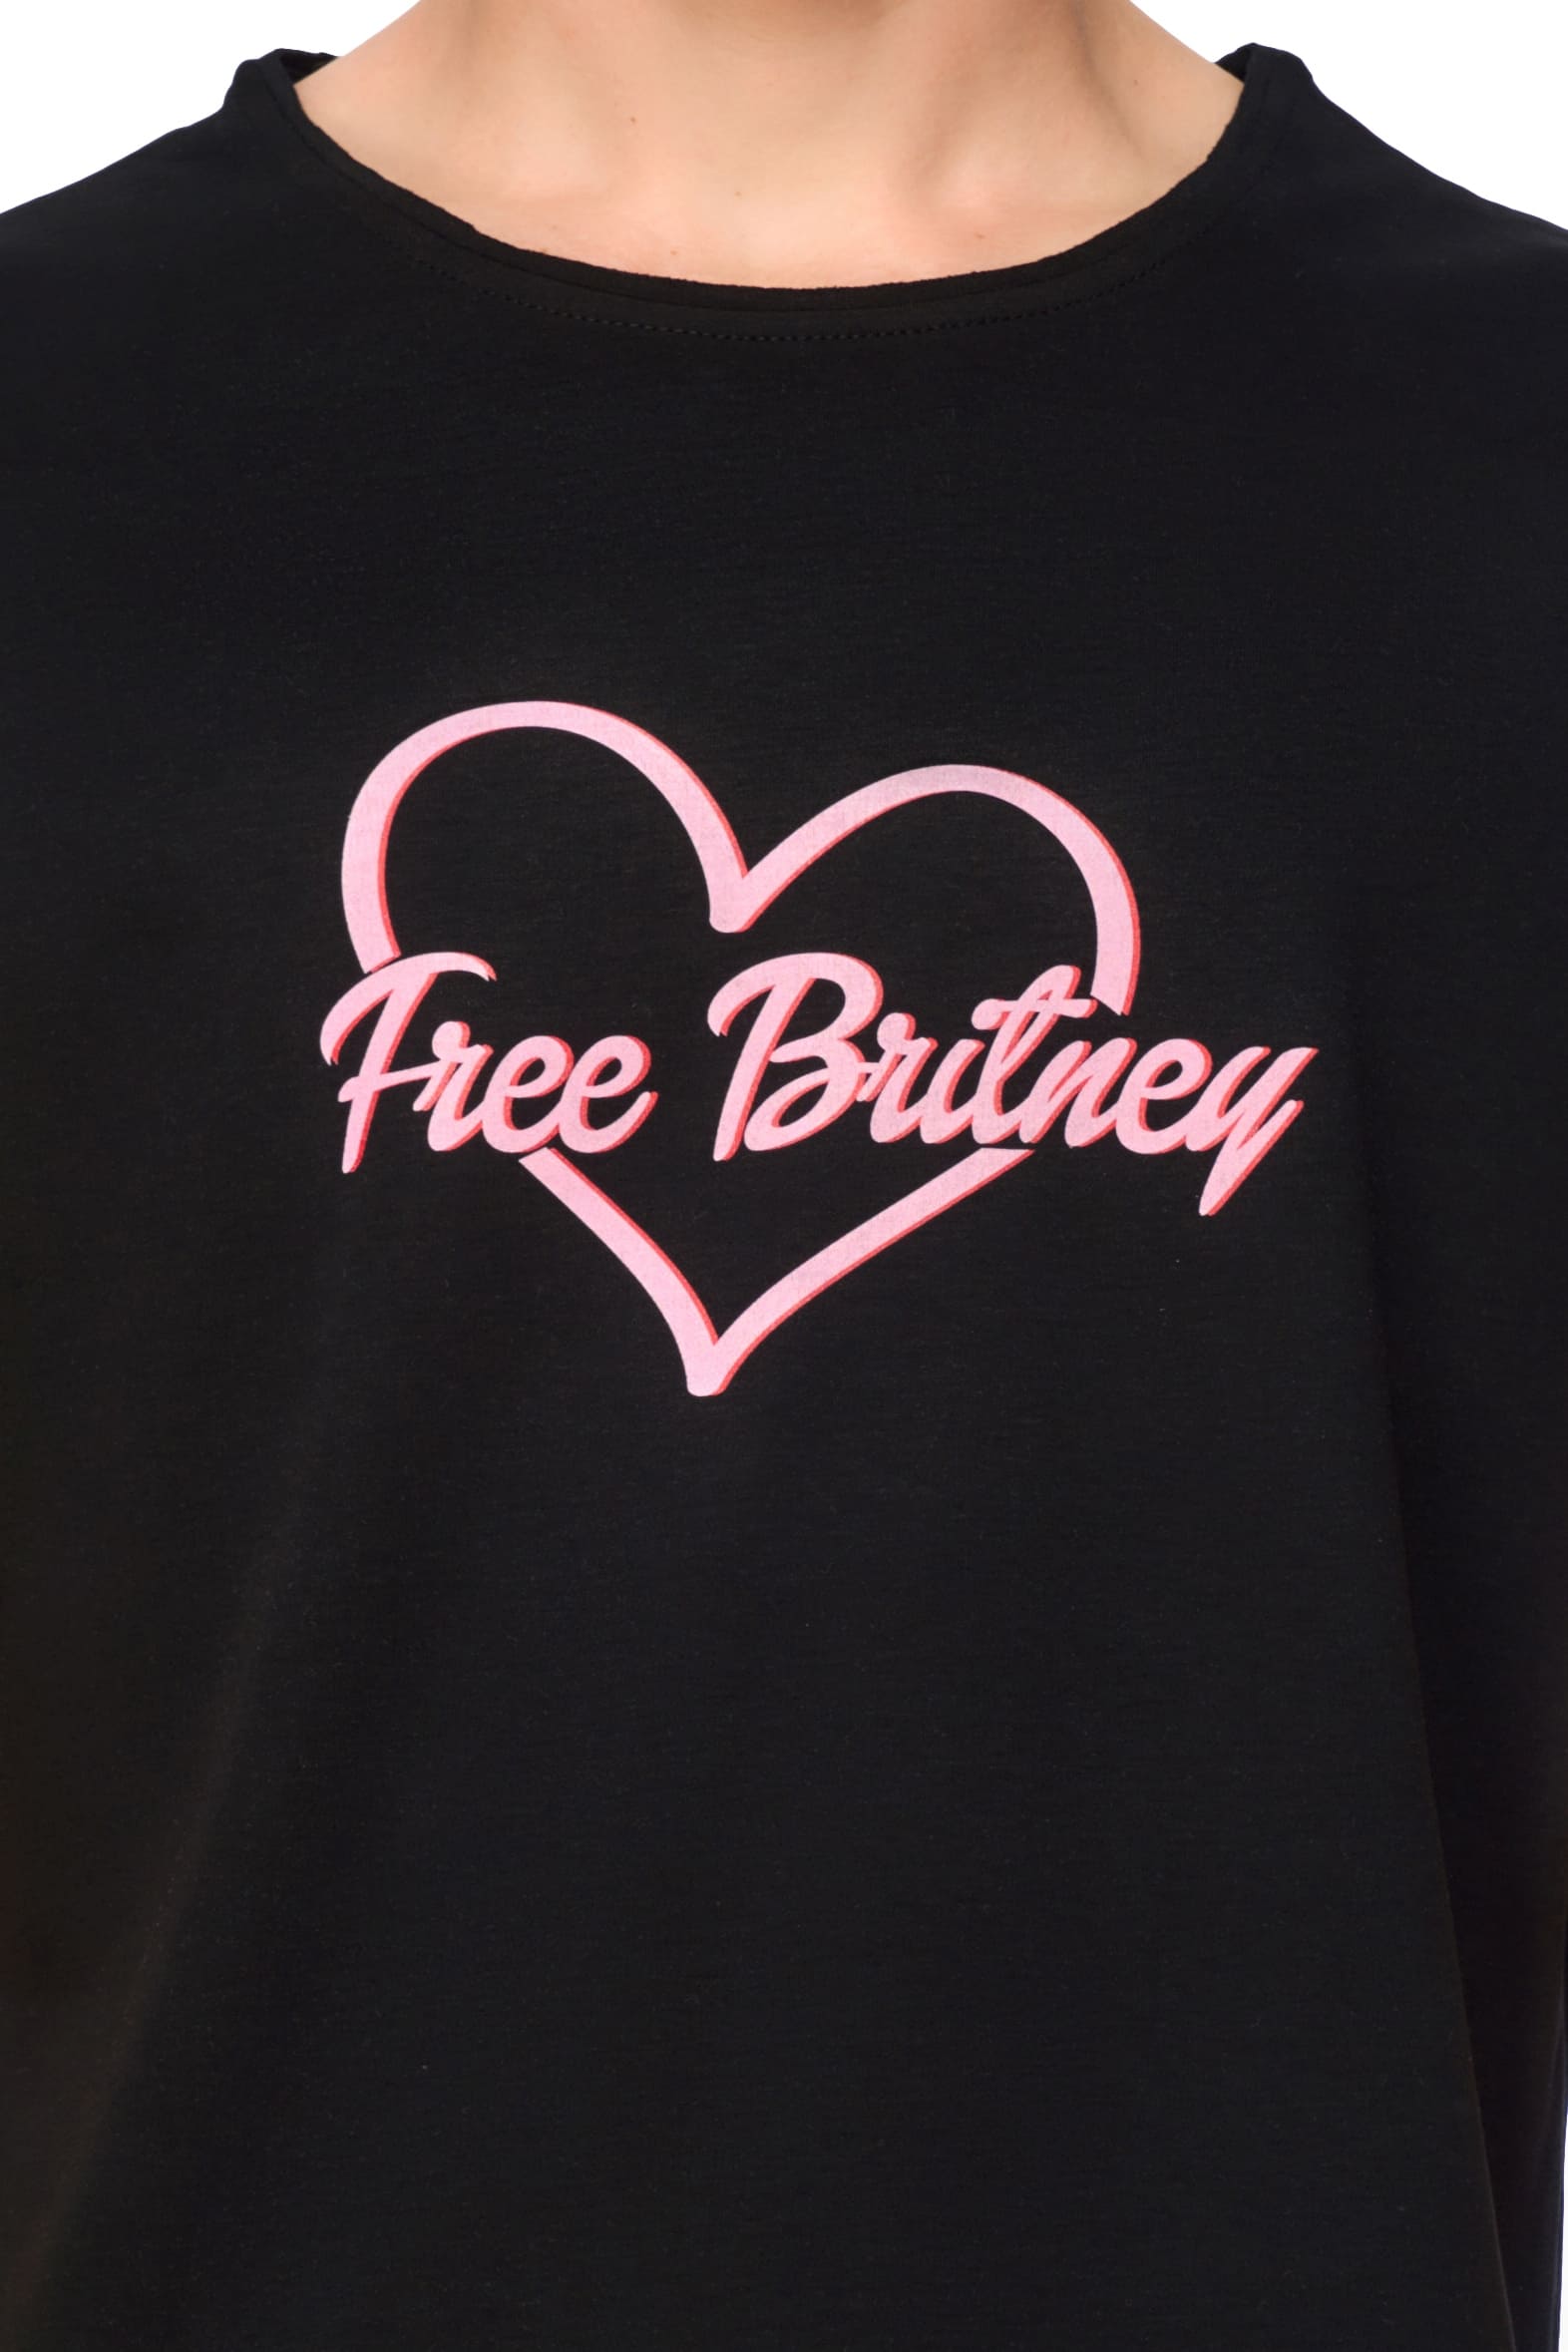 Free Britney Top